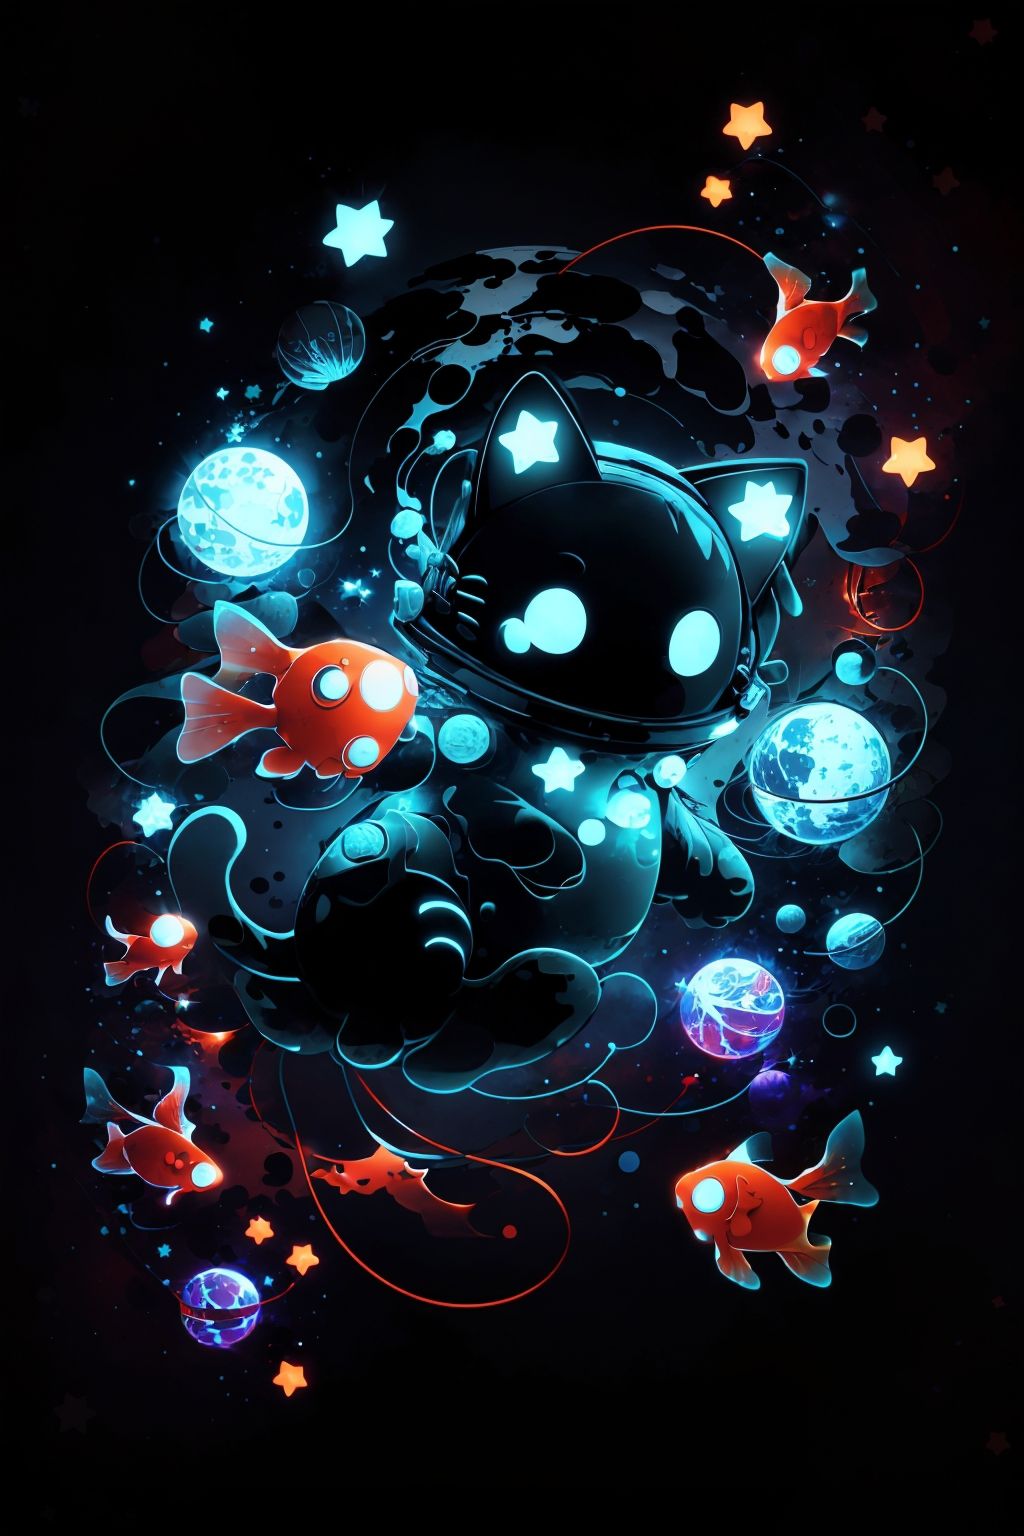 cute00d, star (symbol), glowing, cat, black background, star (sky), floating, fish, space, yarn, space helmet, yarn ball, swimming orange fish, <lora:cute00d-000020:1>